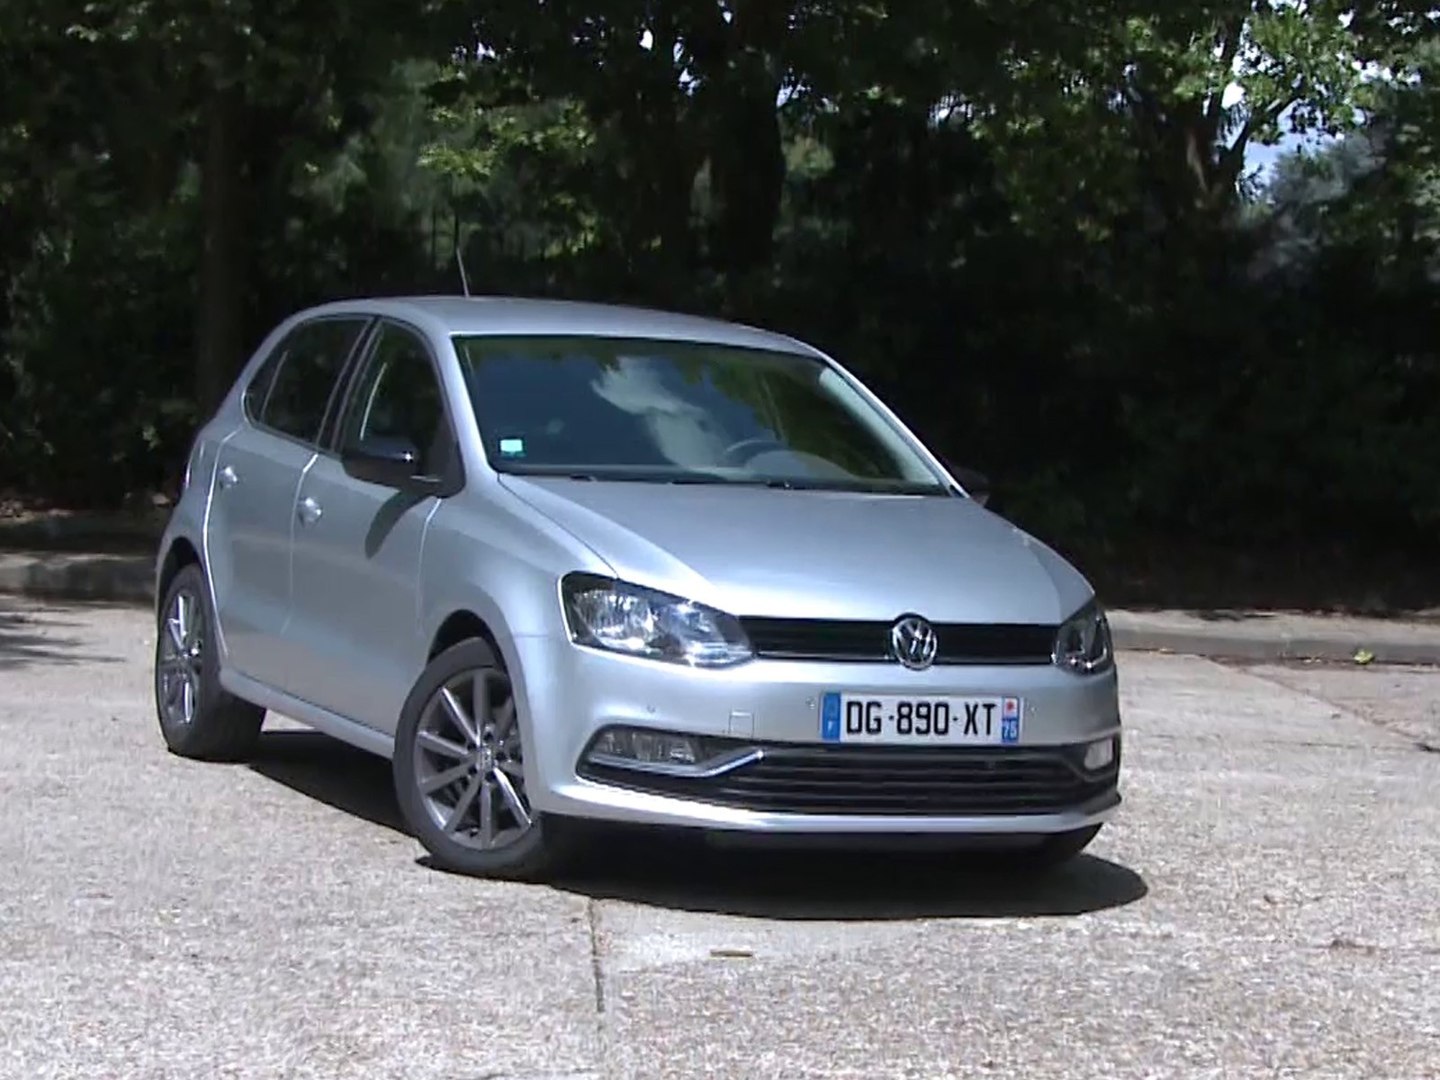 Essai Volkswagen Polo 1.4 TDi 90 Cup 2014 - Vidéo Dailymotion